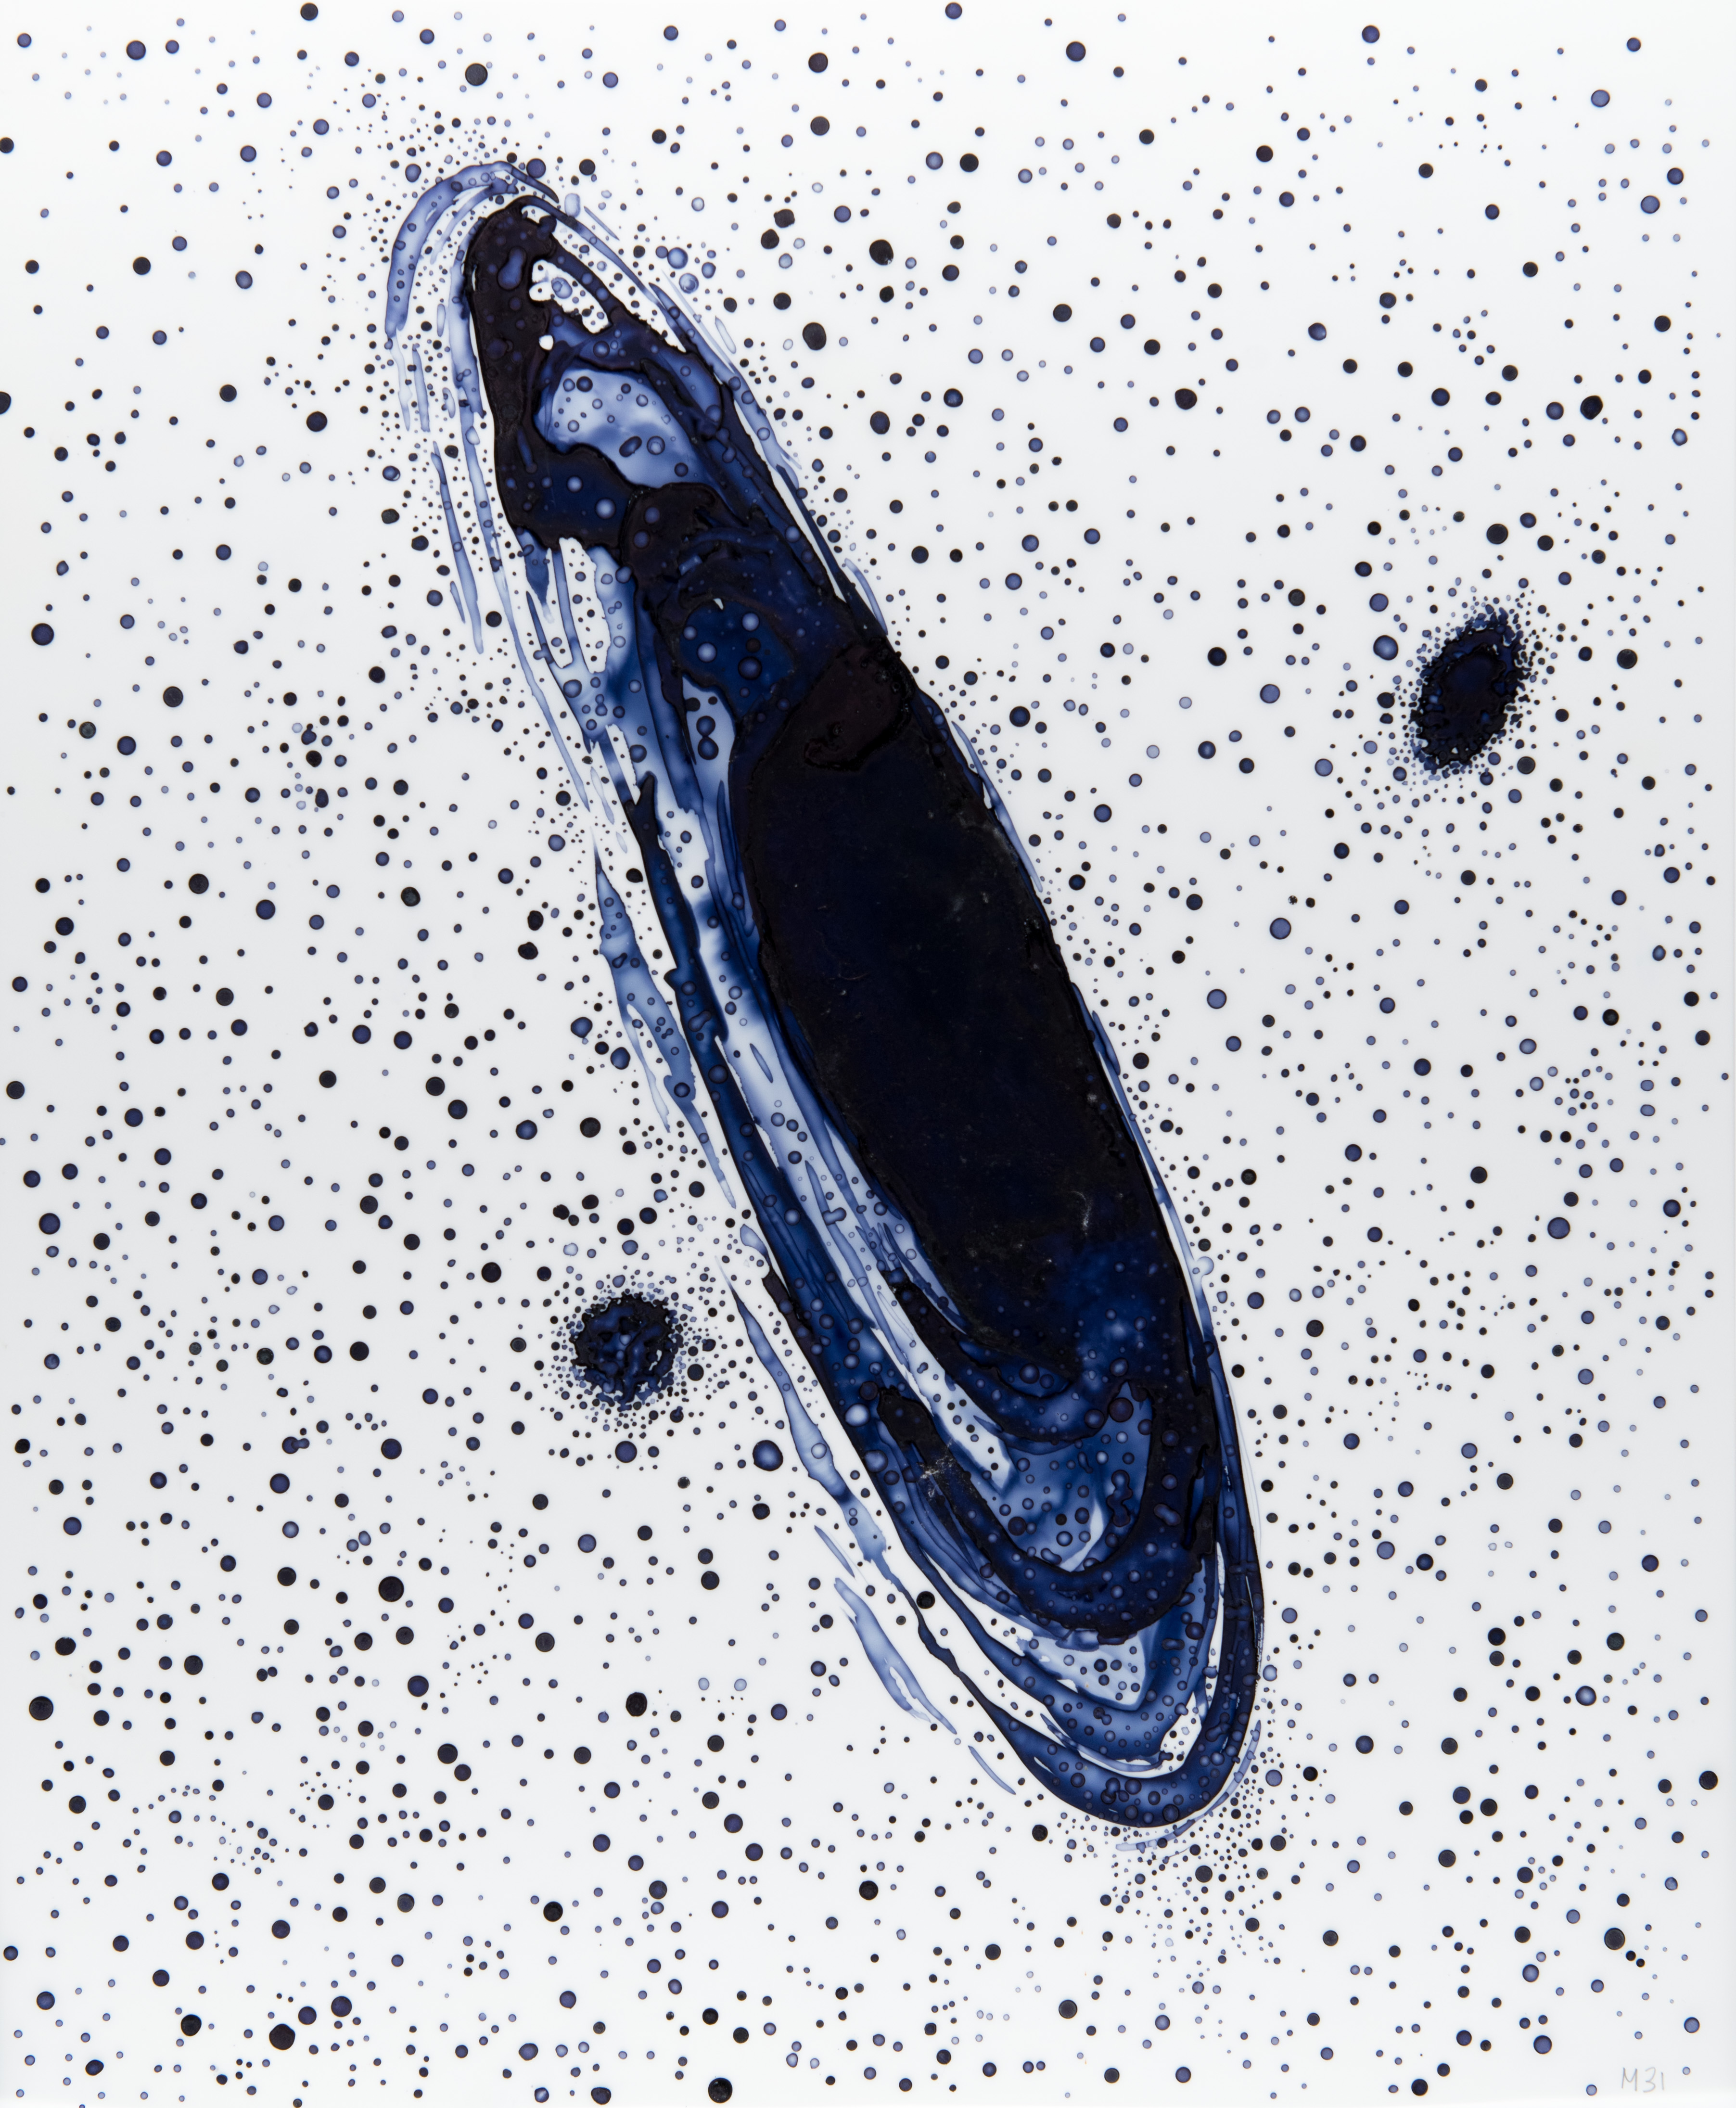 Painting of M31 (Andromeda Galaxy), from "Deep Sky Companion" by Lia Halloran. Credit: Lia Halloran